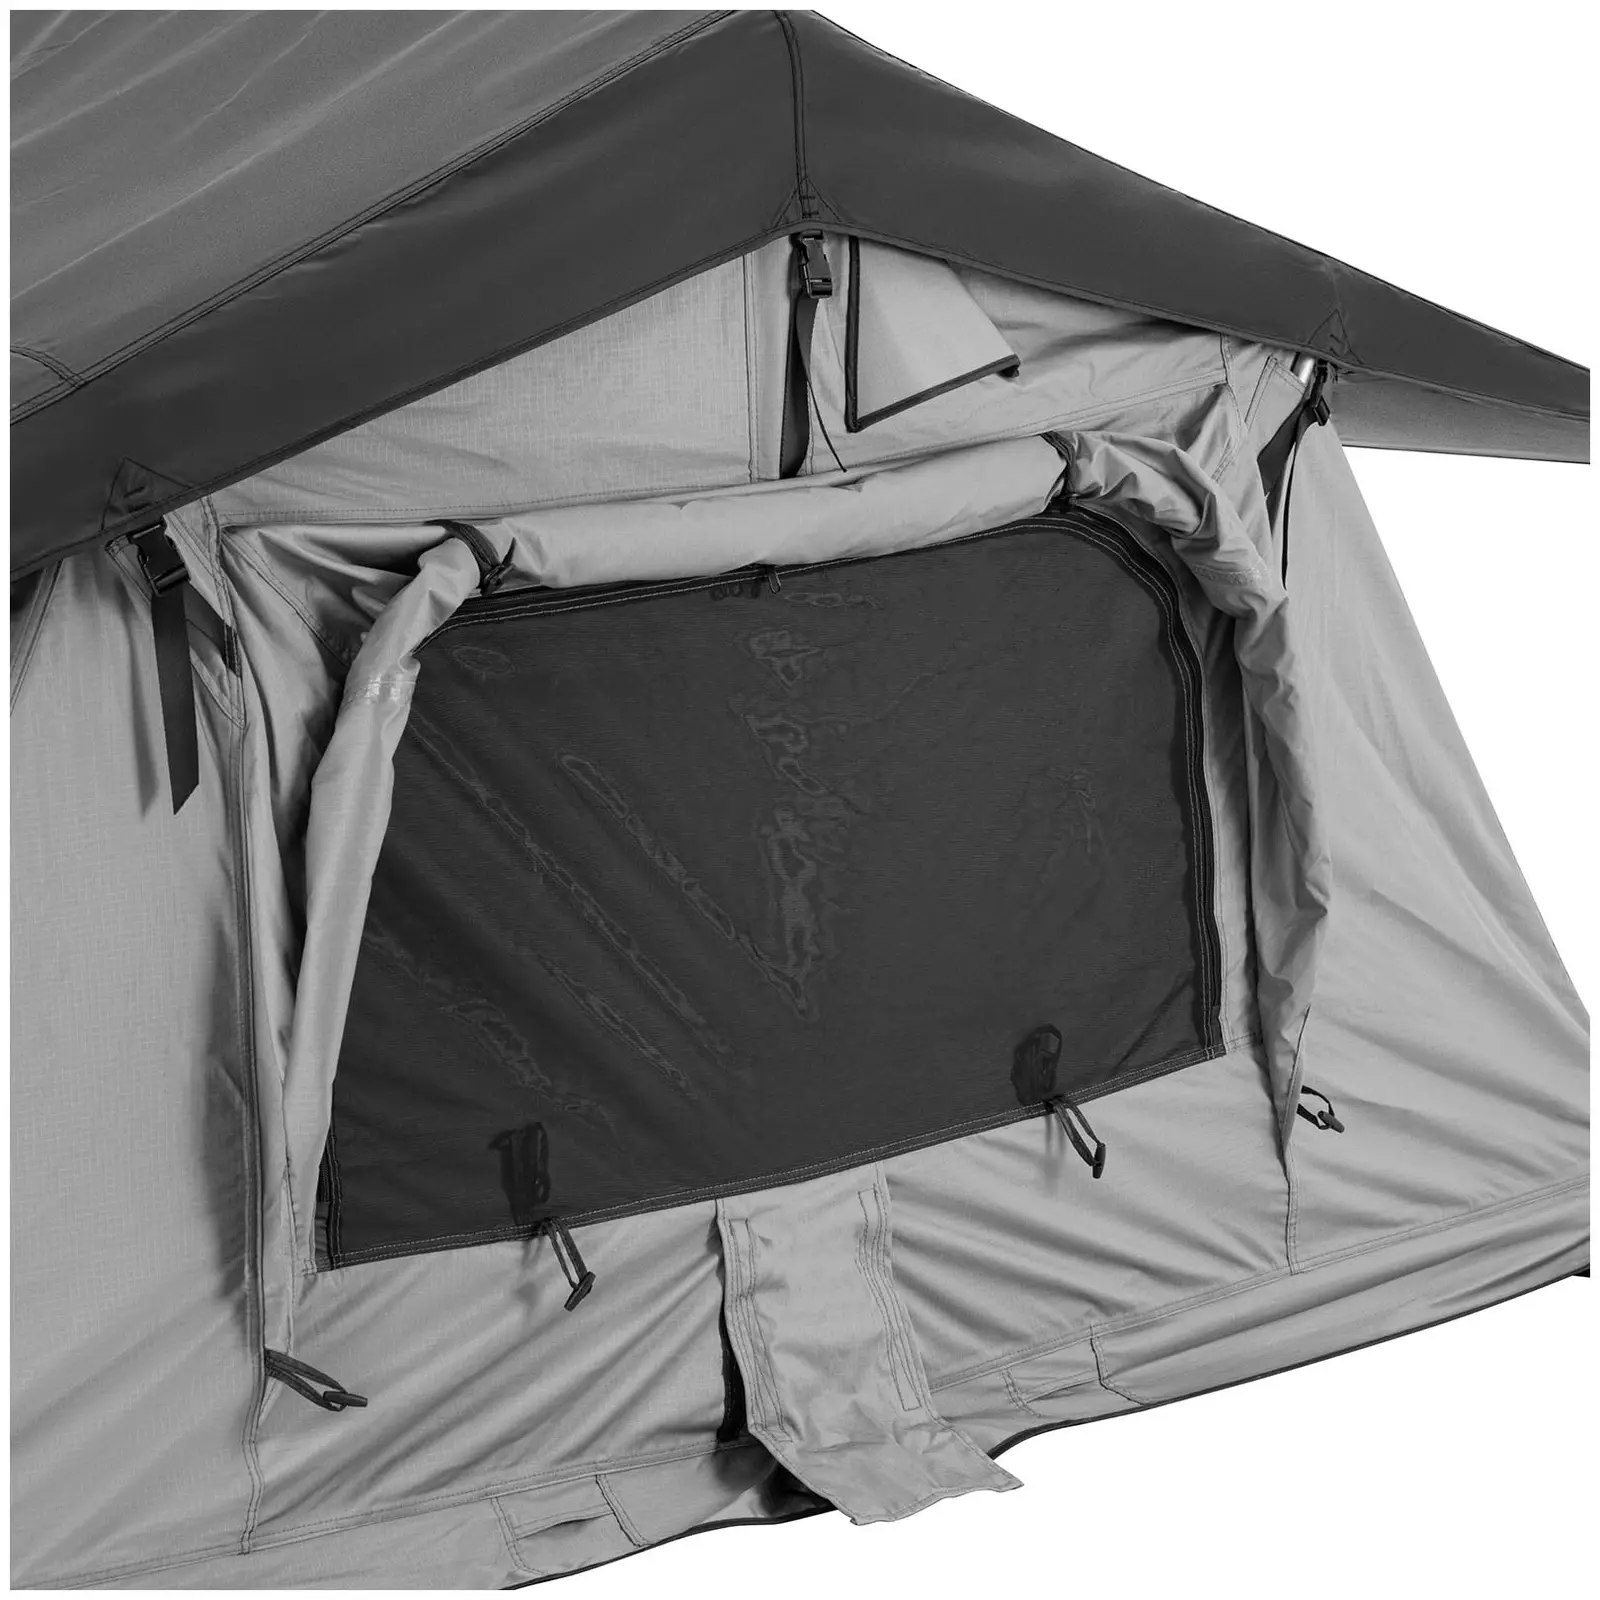 Šator za krov automobila - 240 x 140 x 130 cm